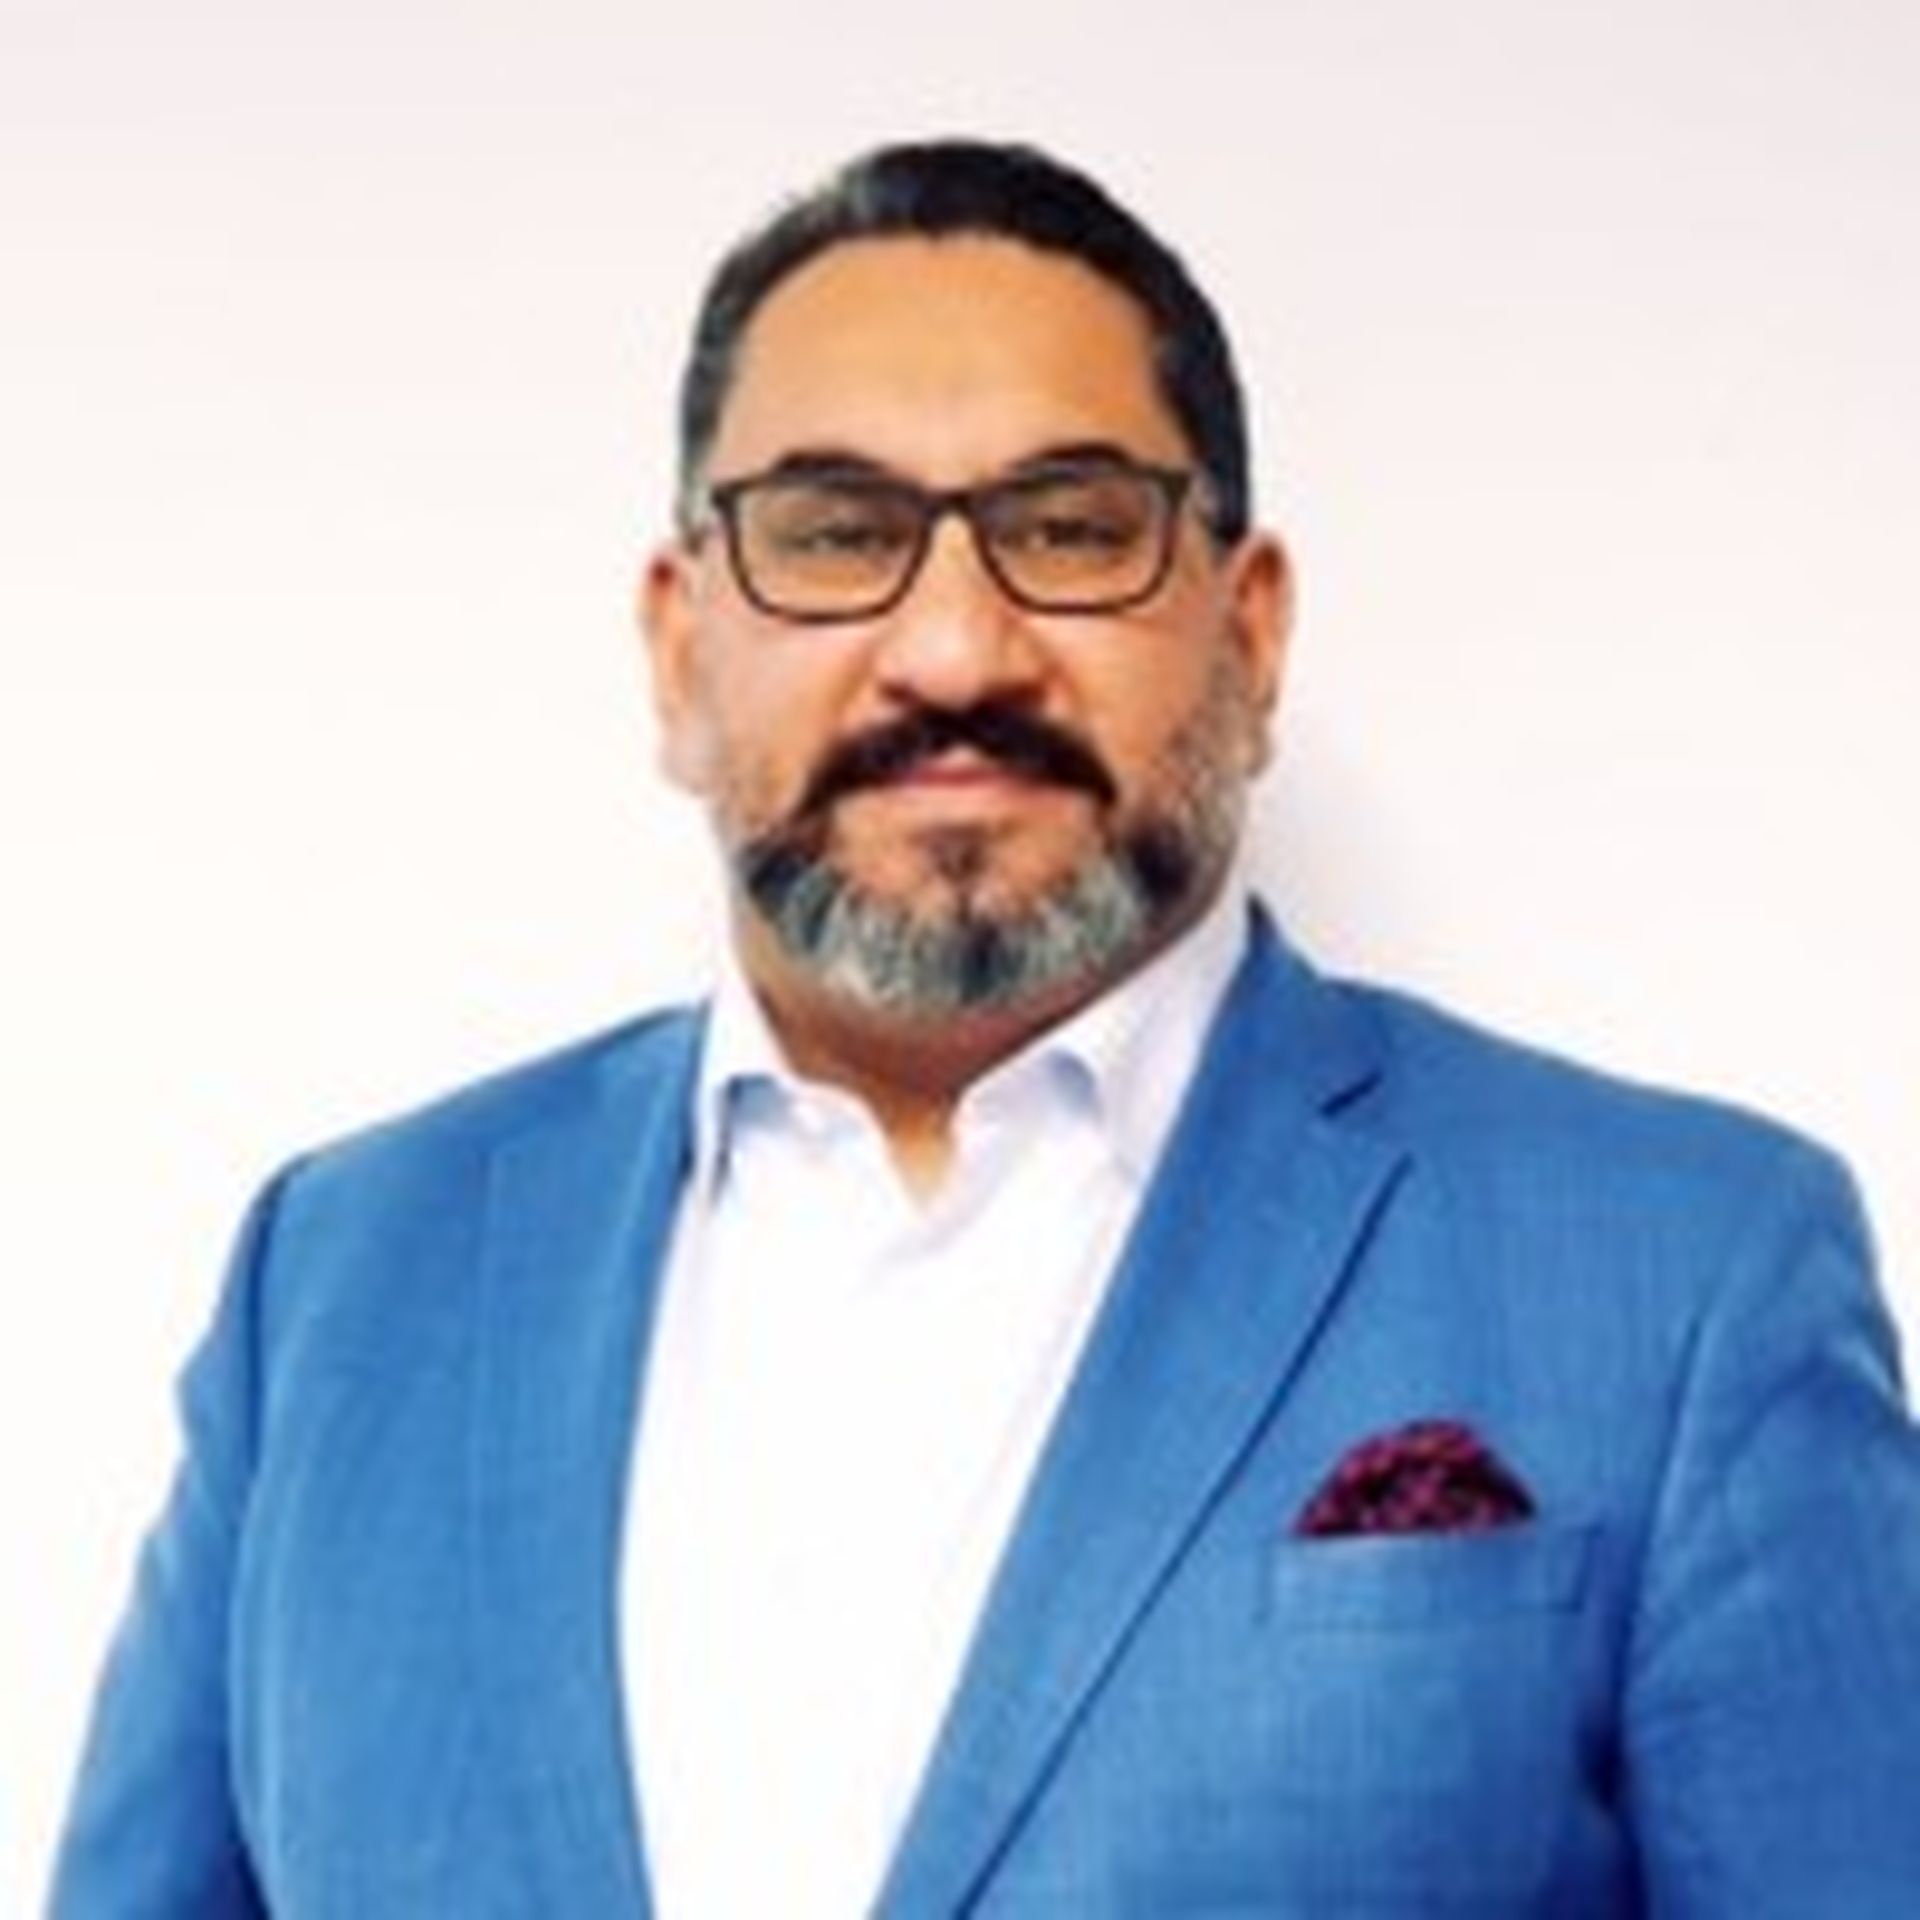 Gurmeet Bhatia, president and CEO, Skybridge Global